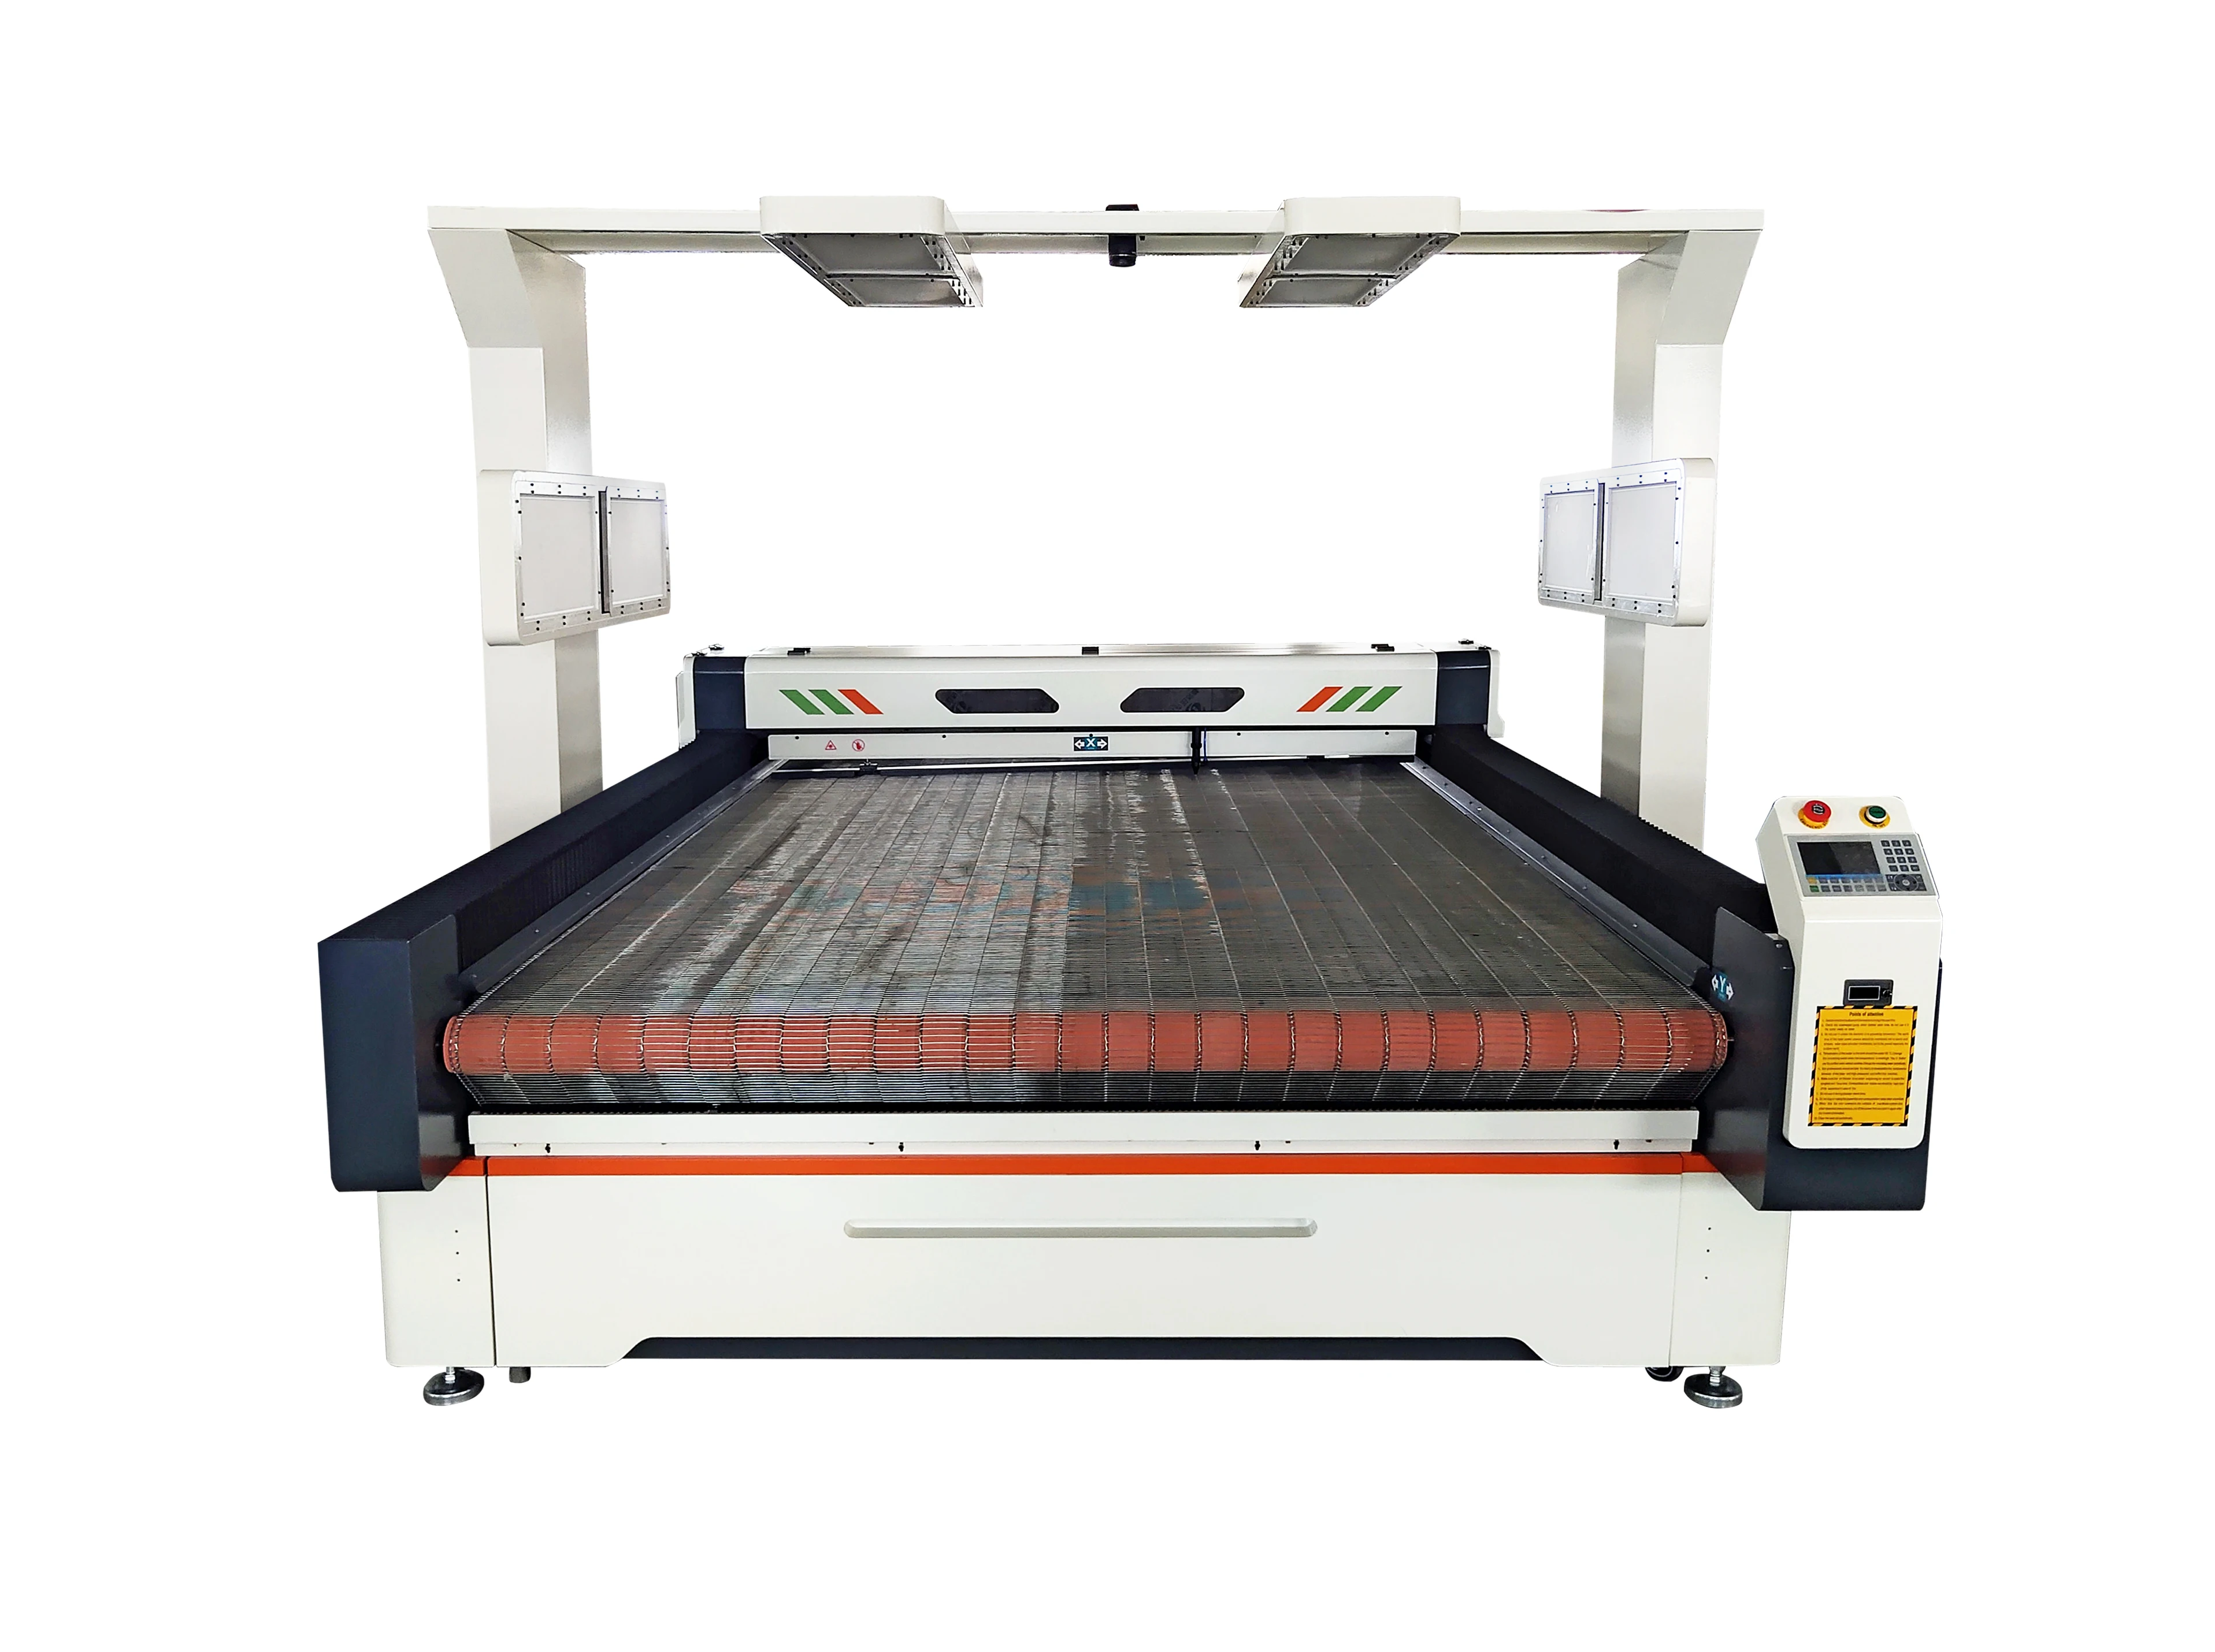 1600*2000mm large scanning size CCD camera conyor table auto feeding cloth fabric laser cutting machine